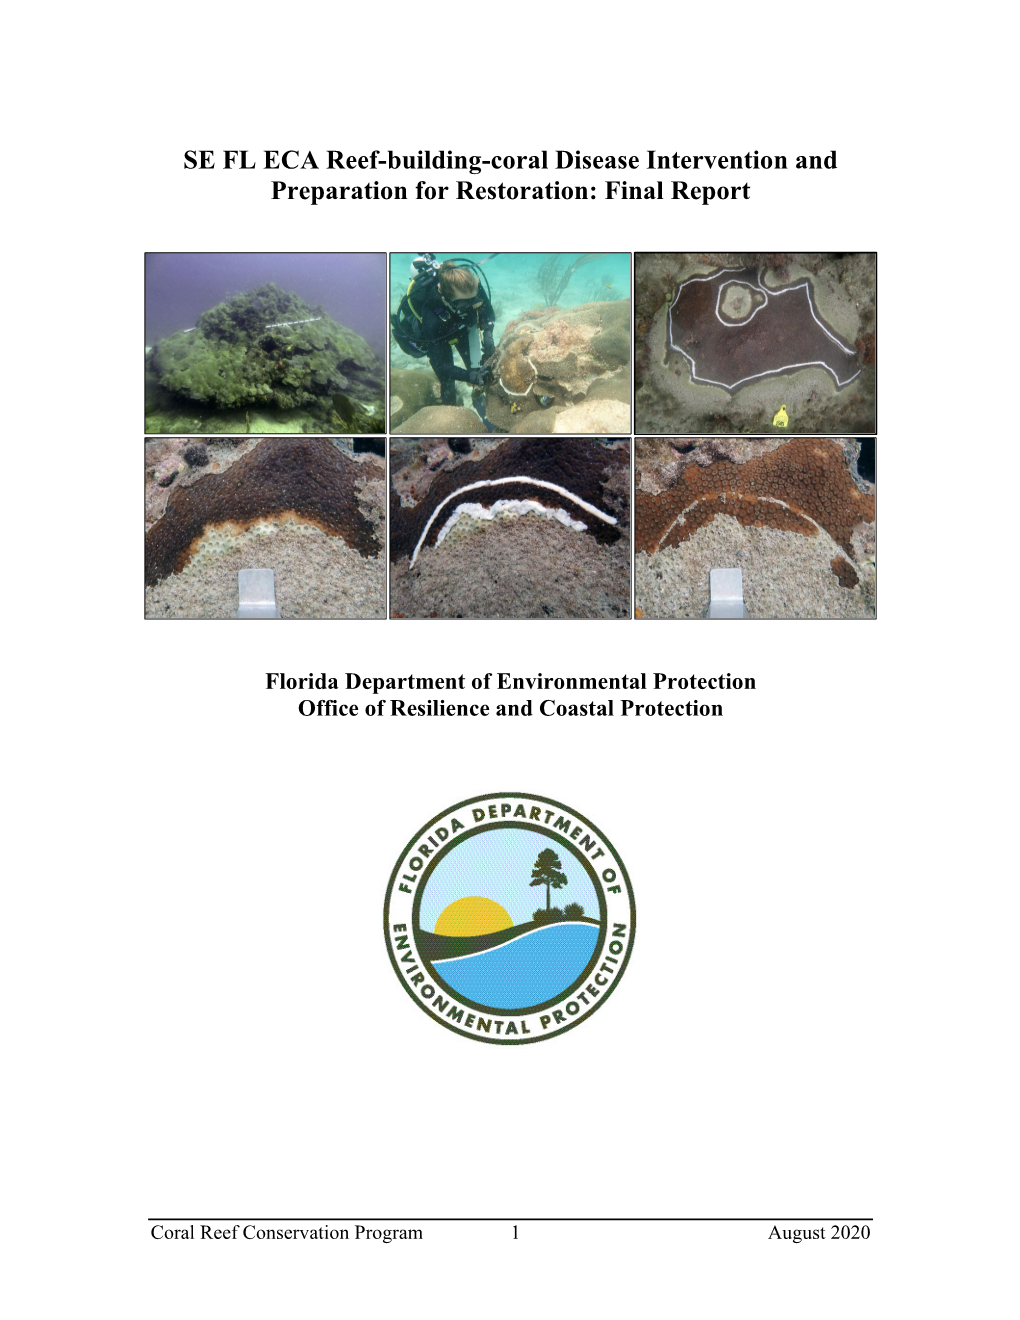 SE FL ECA Reef-Building-Coral Disease Intervention and Preparation for Restoration: Final Report